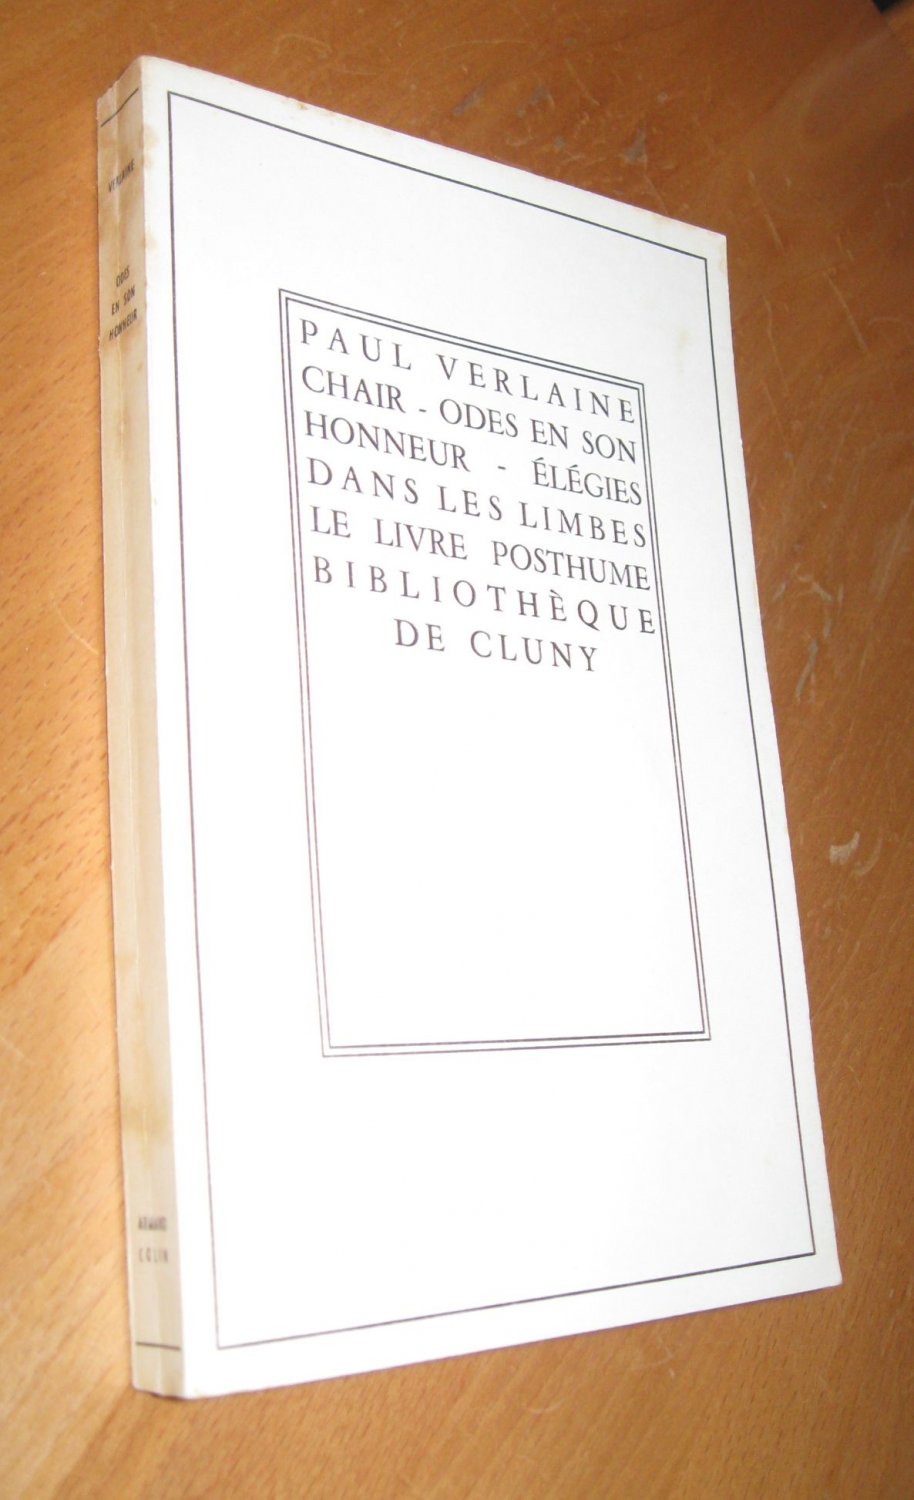 Odes en son honneur - Paul Verlaine